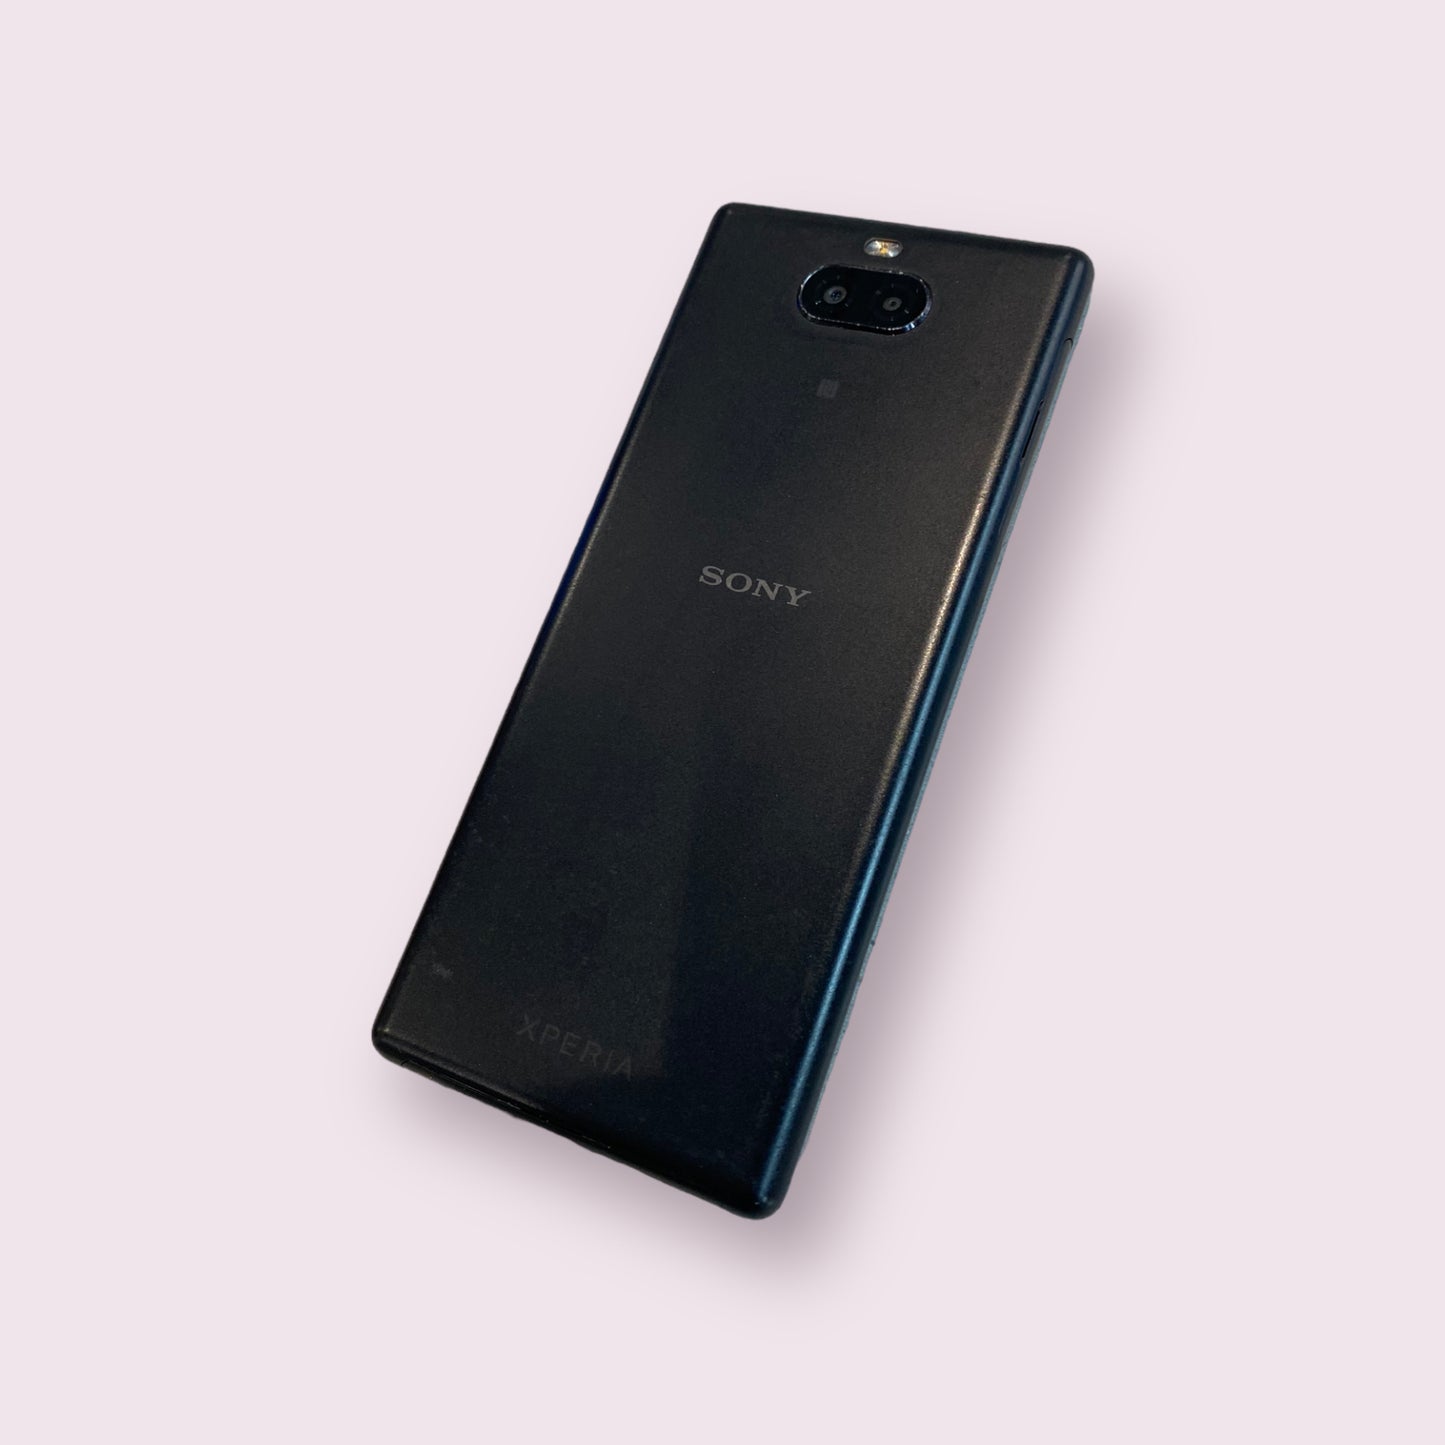 Sony Xperia 10 64GB I3113 Android Smartphone Black - EE - Grade B